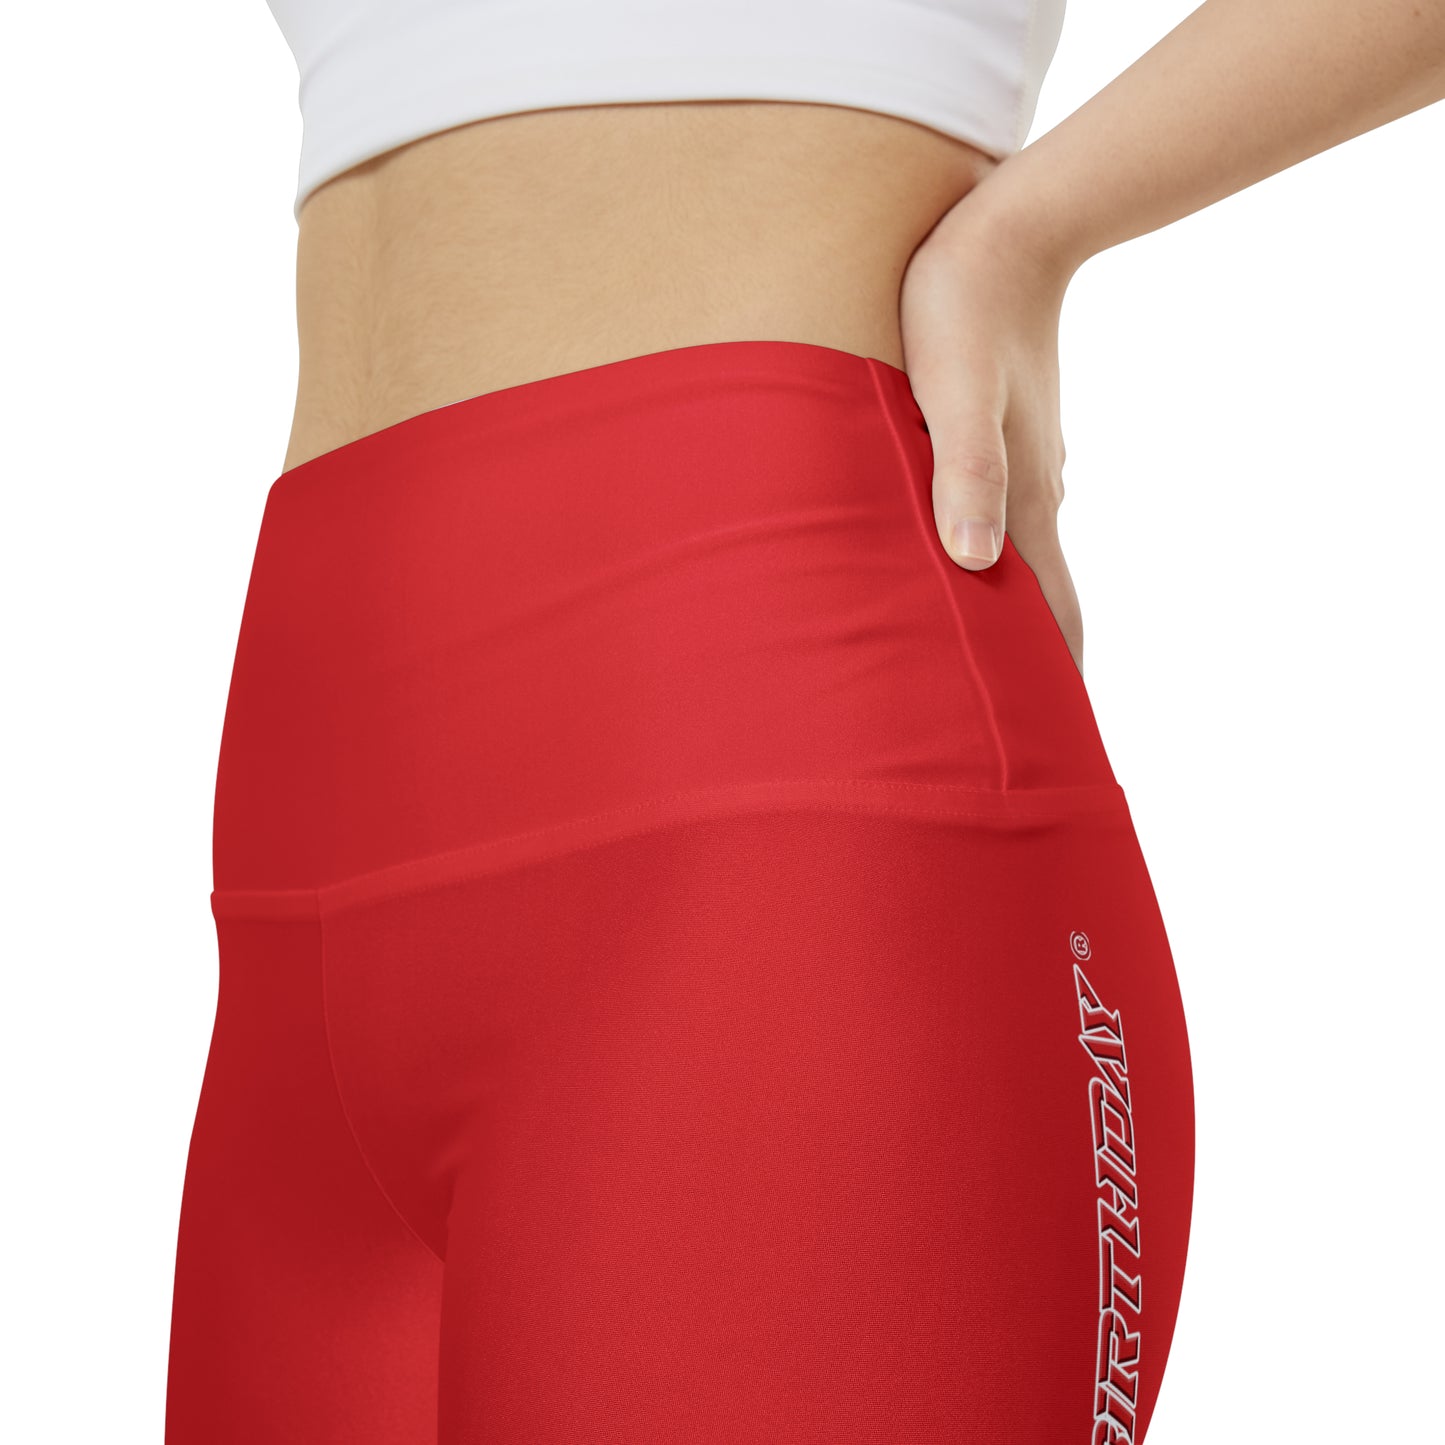 Crappy Birthday WorkoutWit Shorts - Red